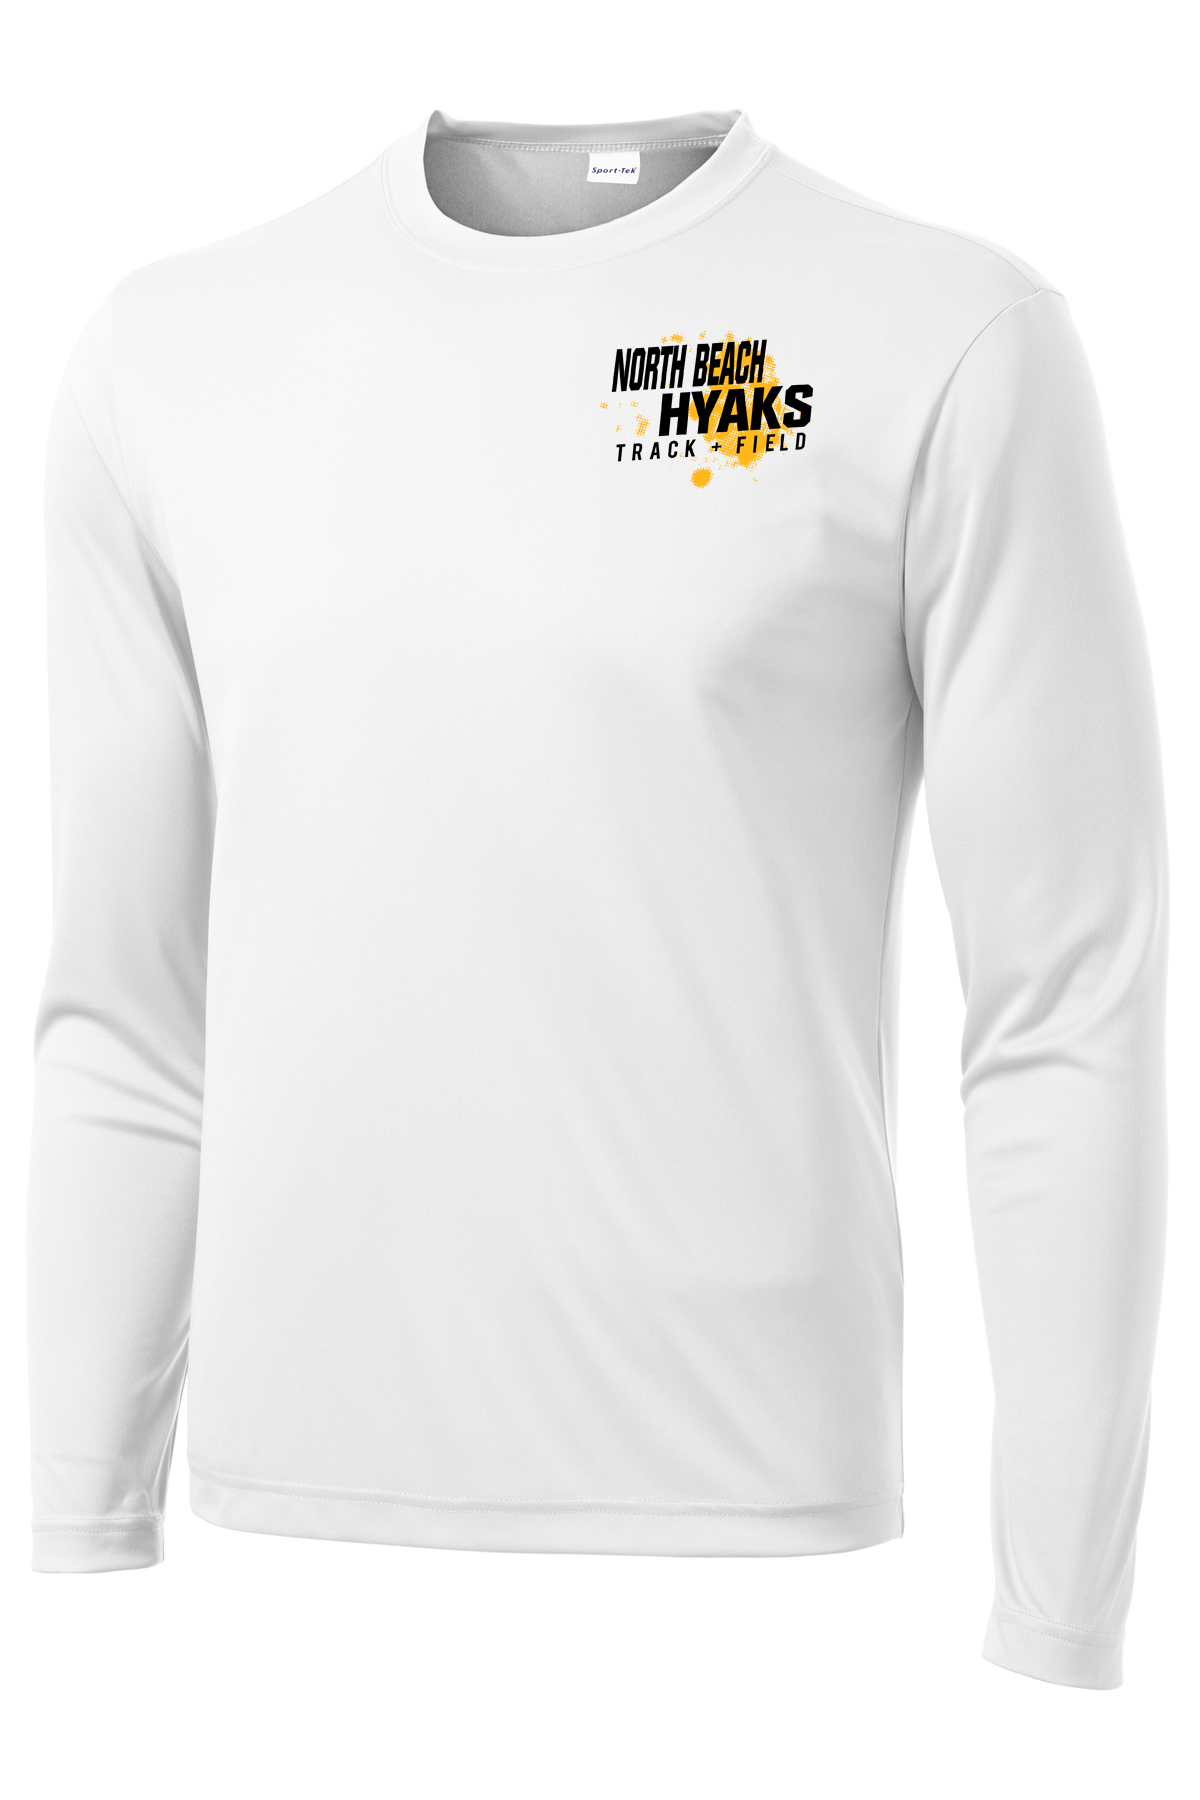 North Beach Track & Field Long Sleeve Performance Shirt